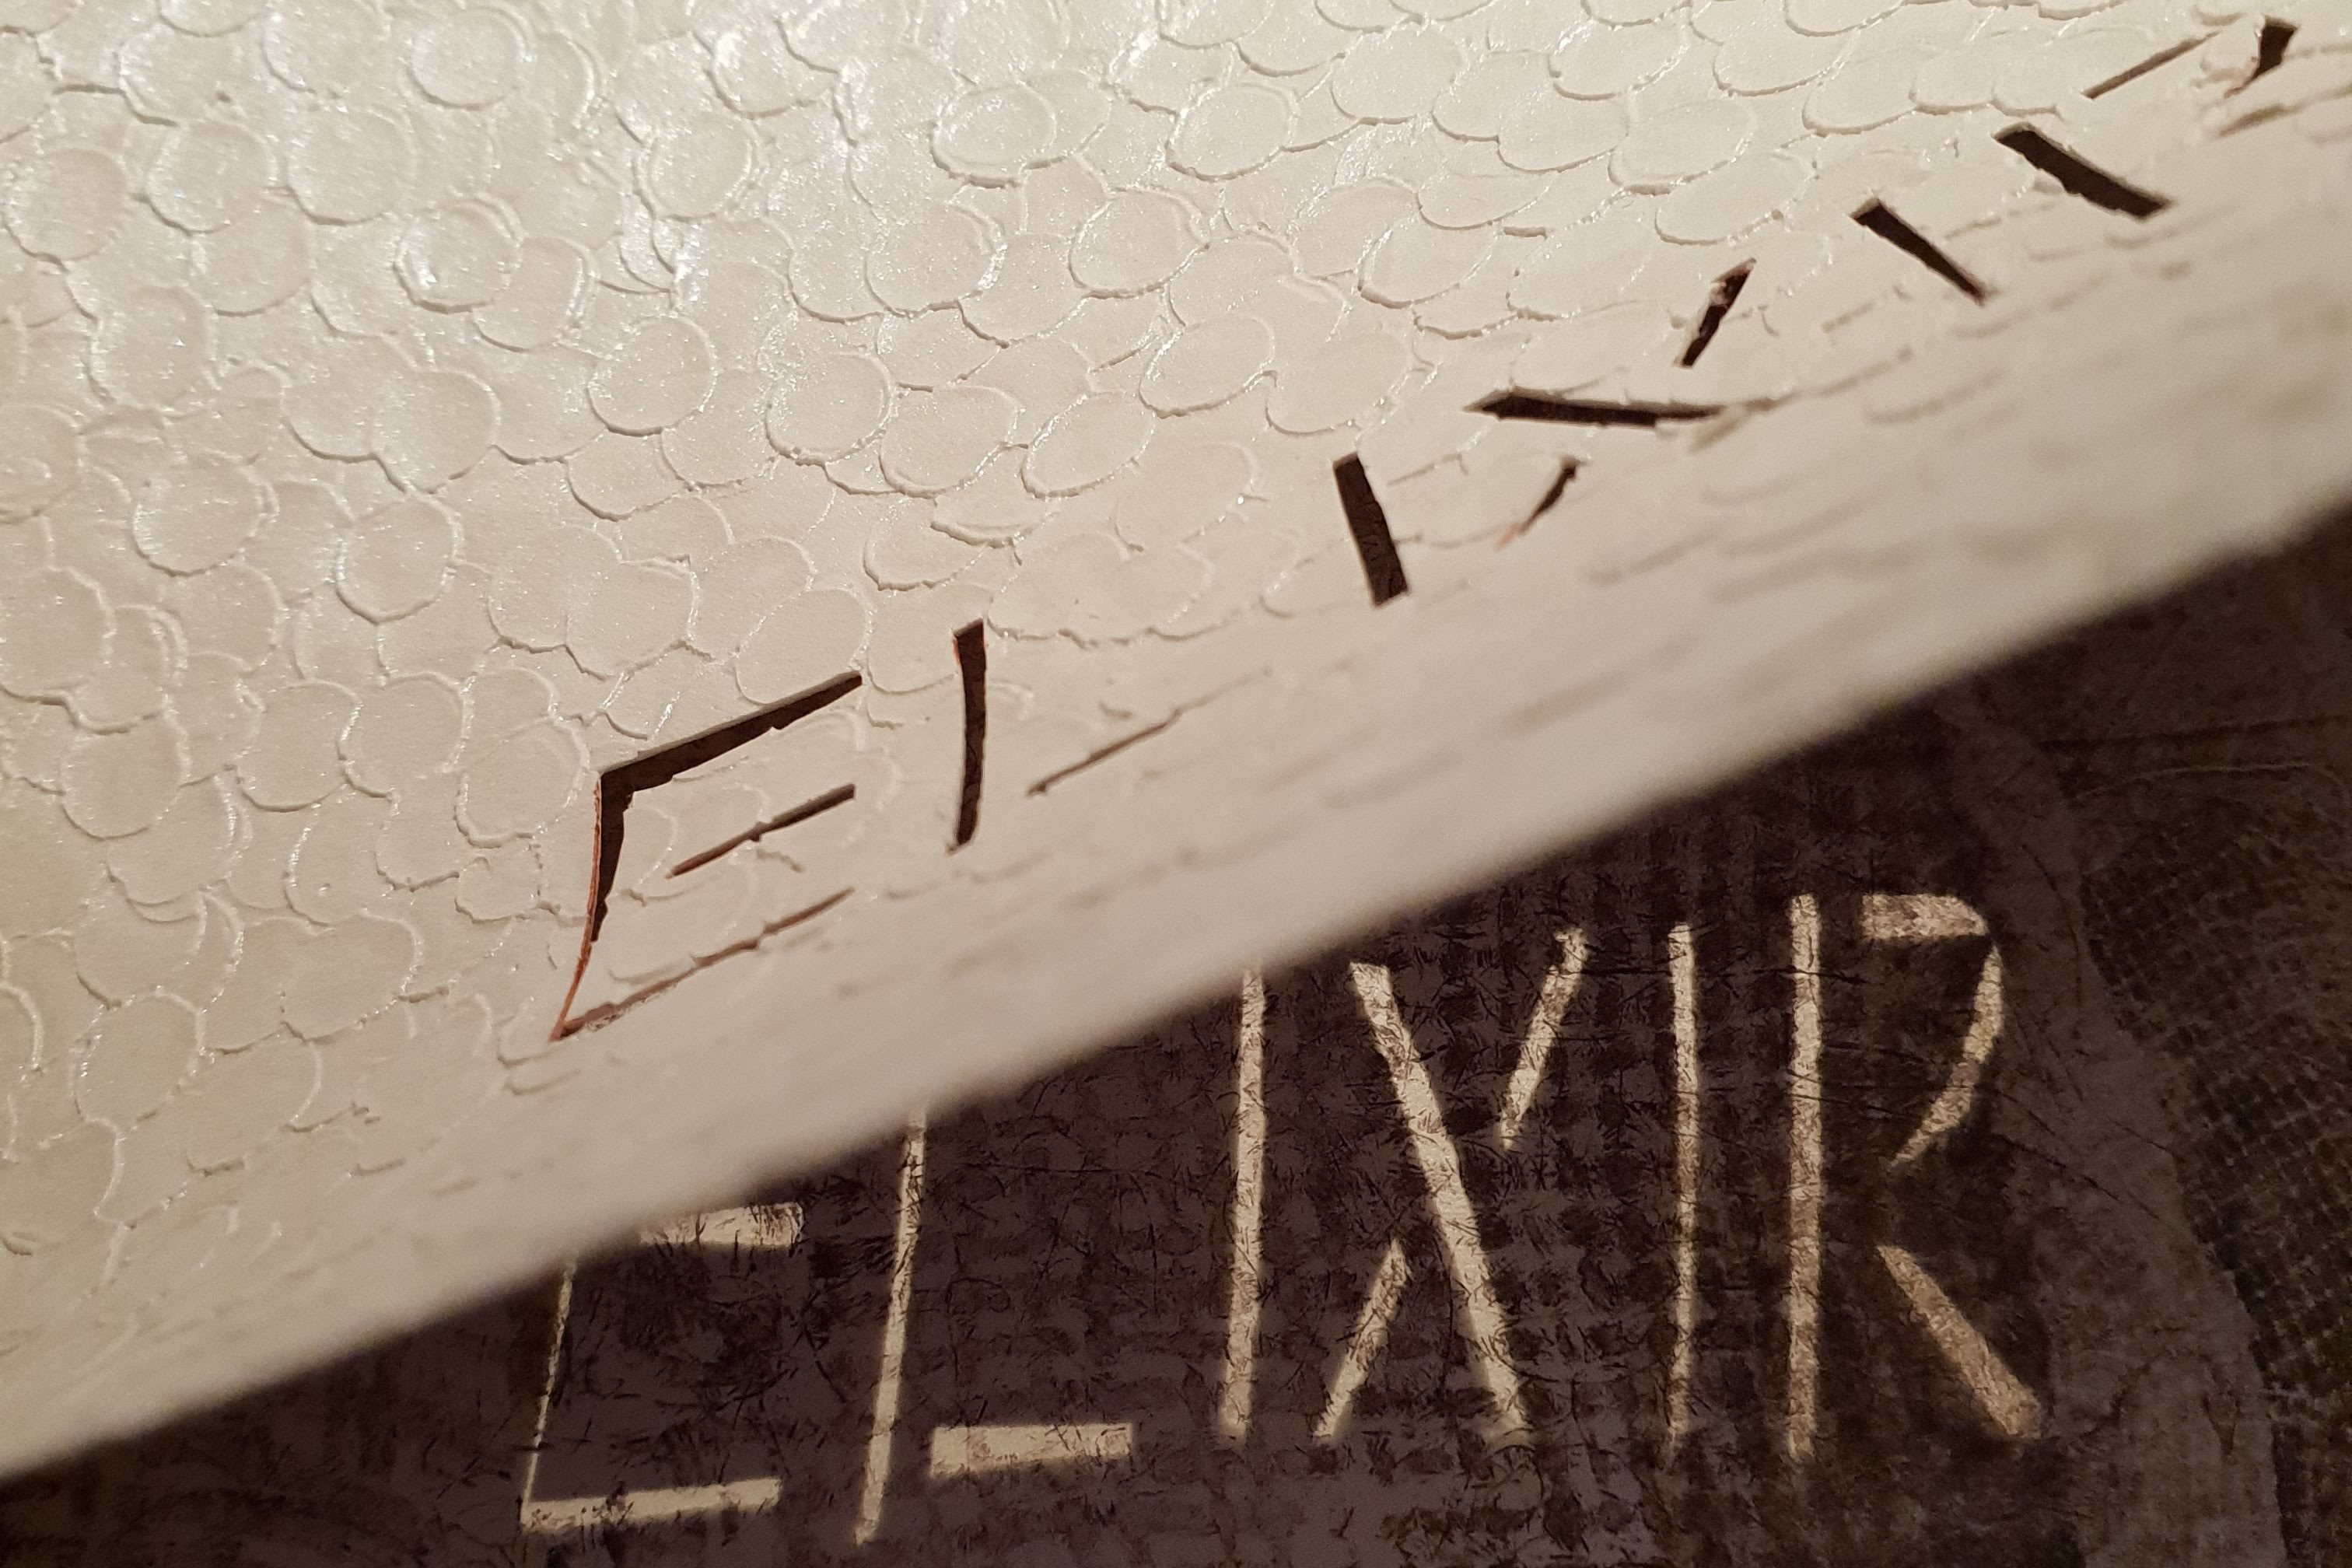 Elixir: Wallpaper and monoprints